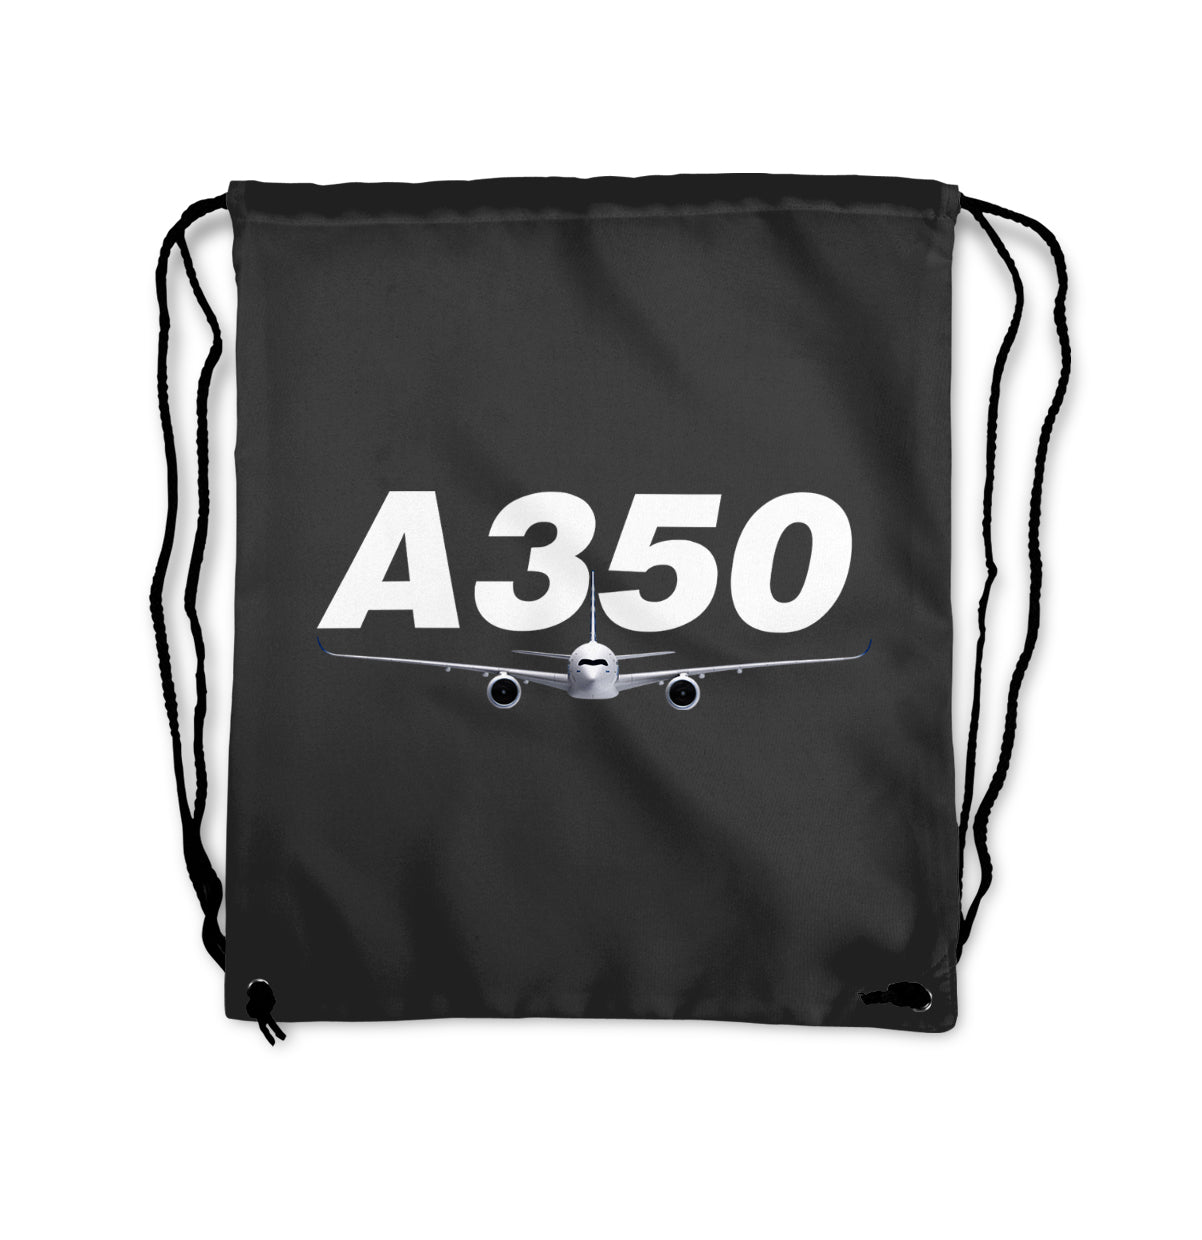 Super Airbus A350 Designed Drawstring Bags